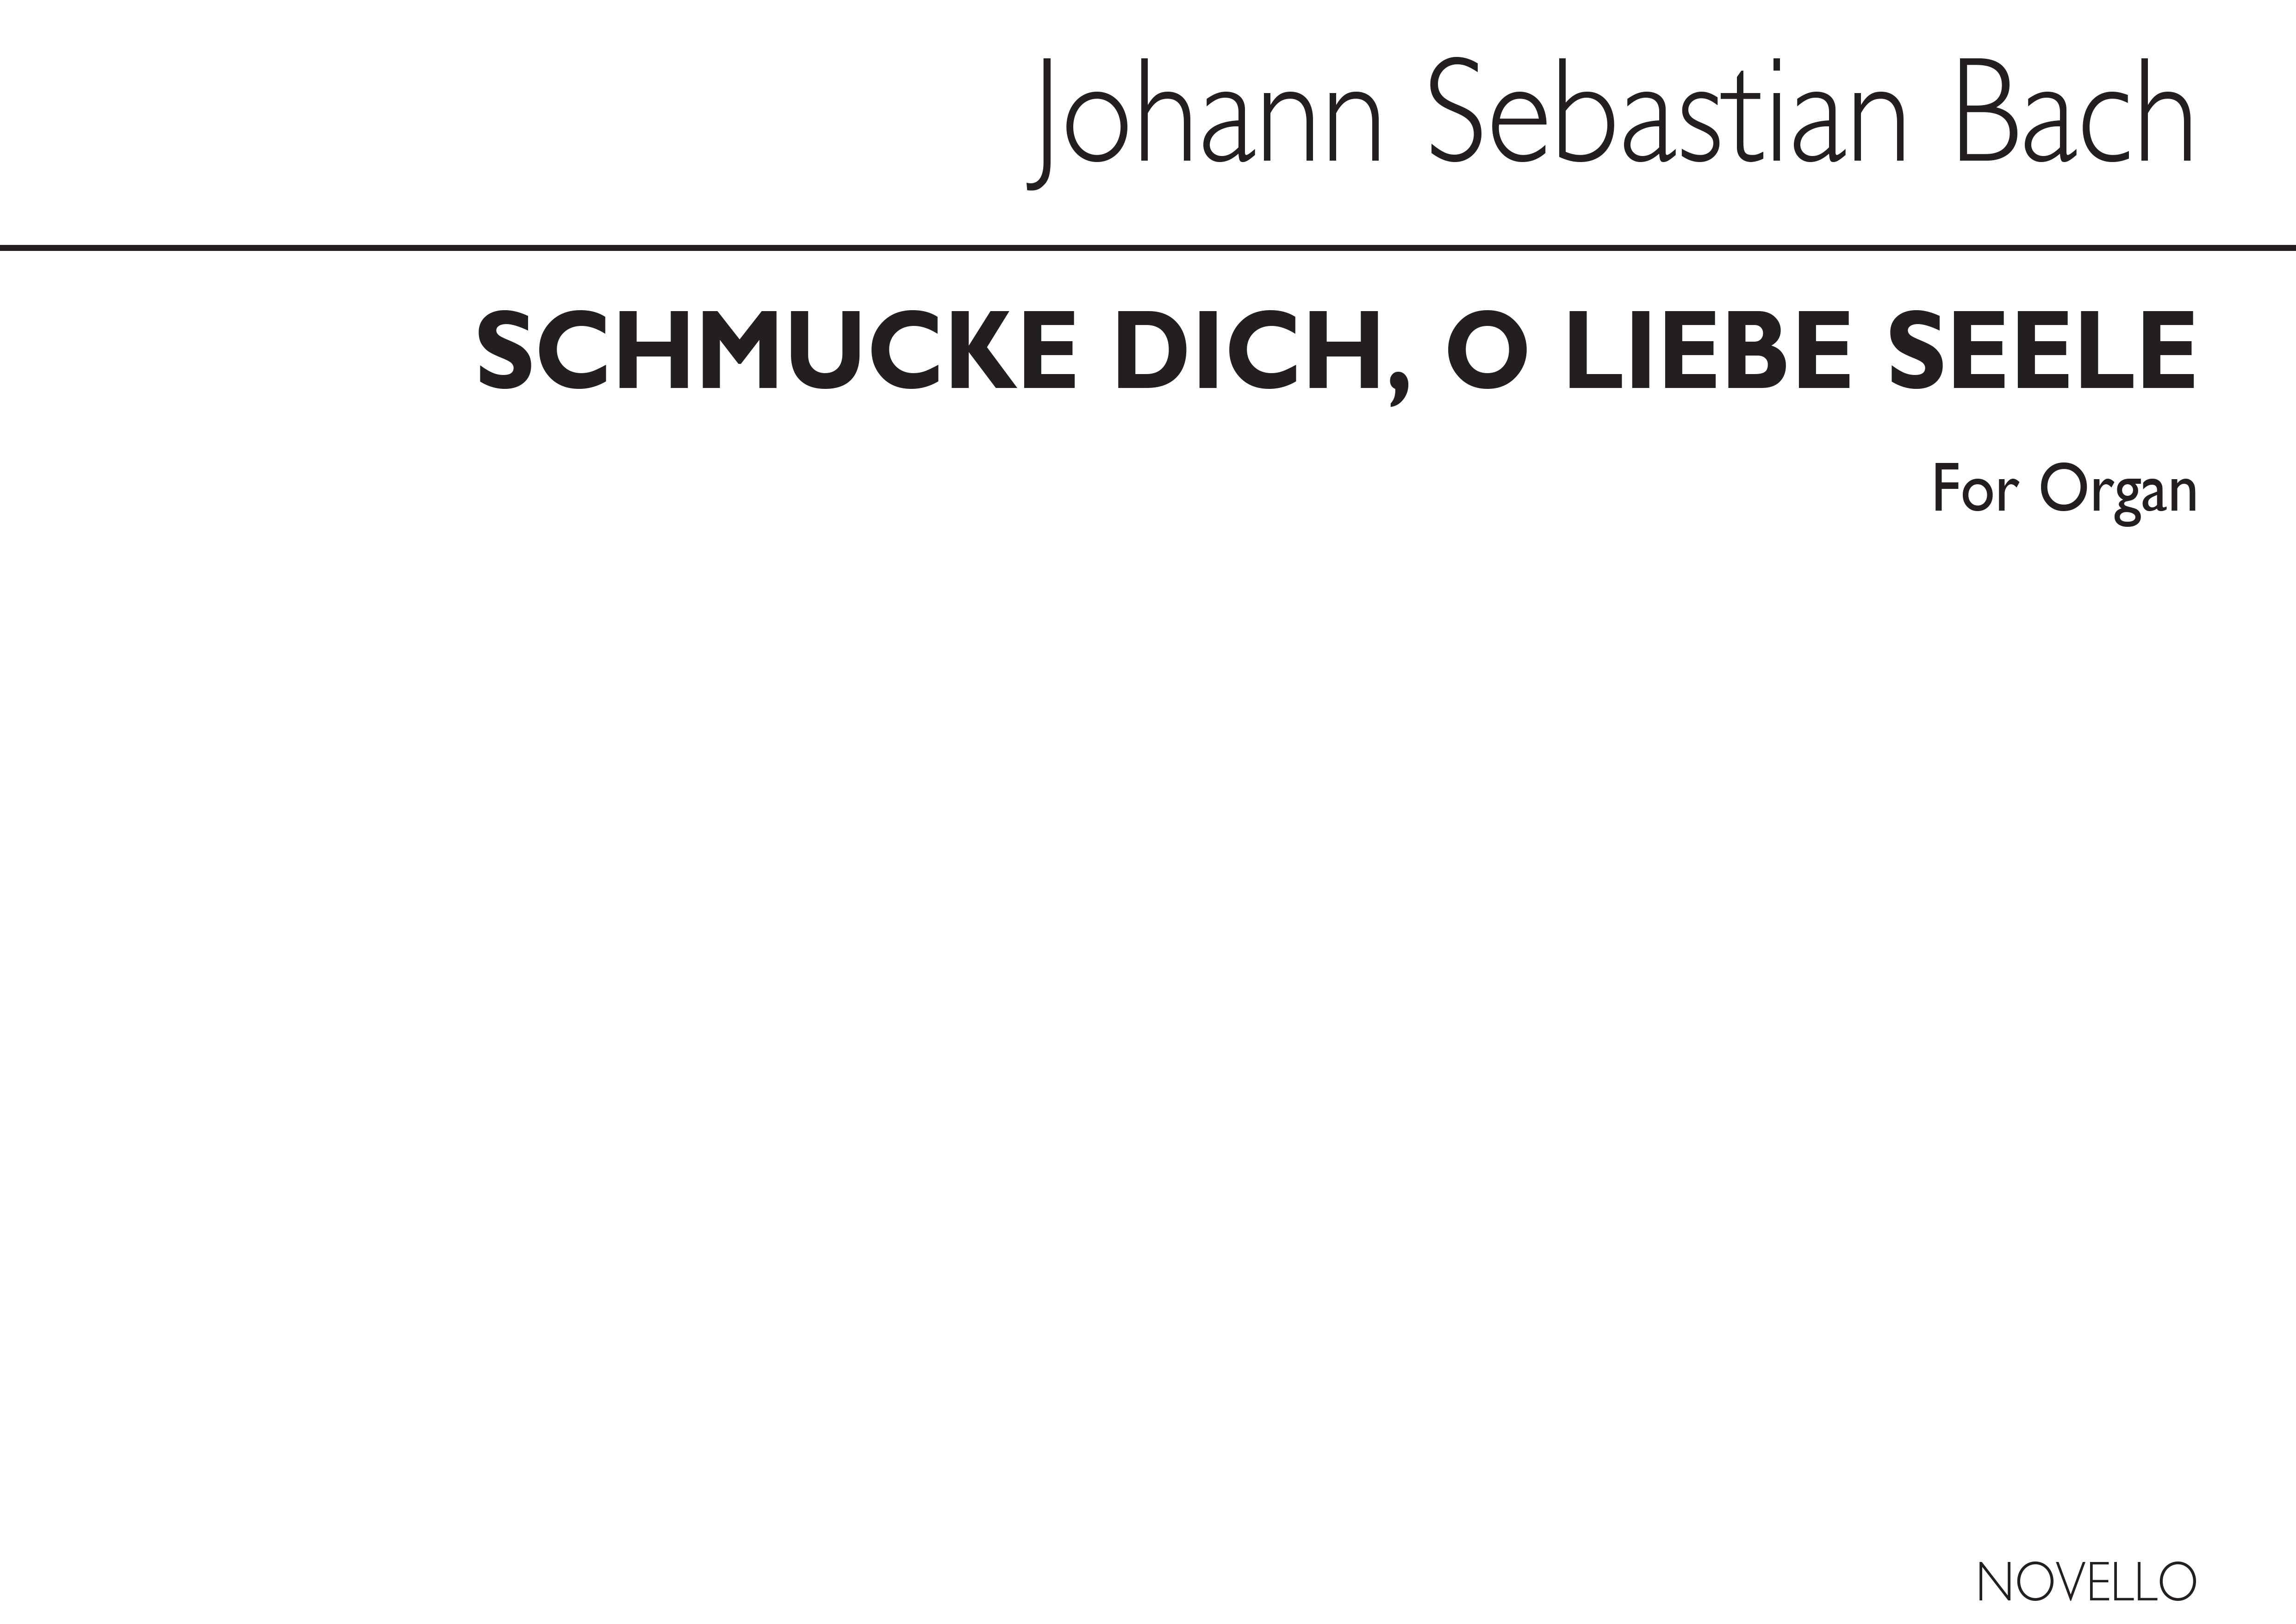 Johann Sebastian Bach: Schmucke Dich O Liebe Seele (Choral Prelude): Organ: